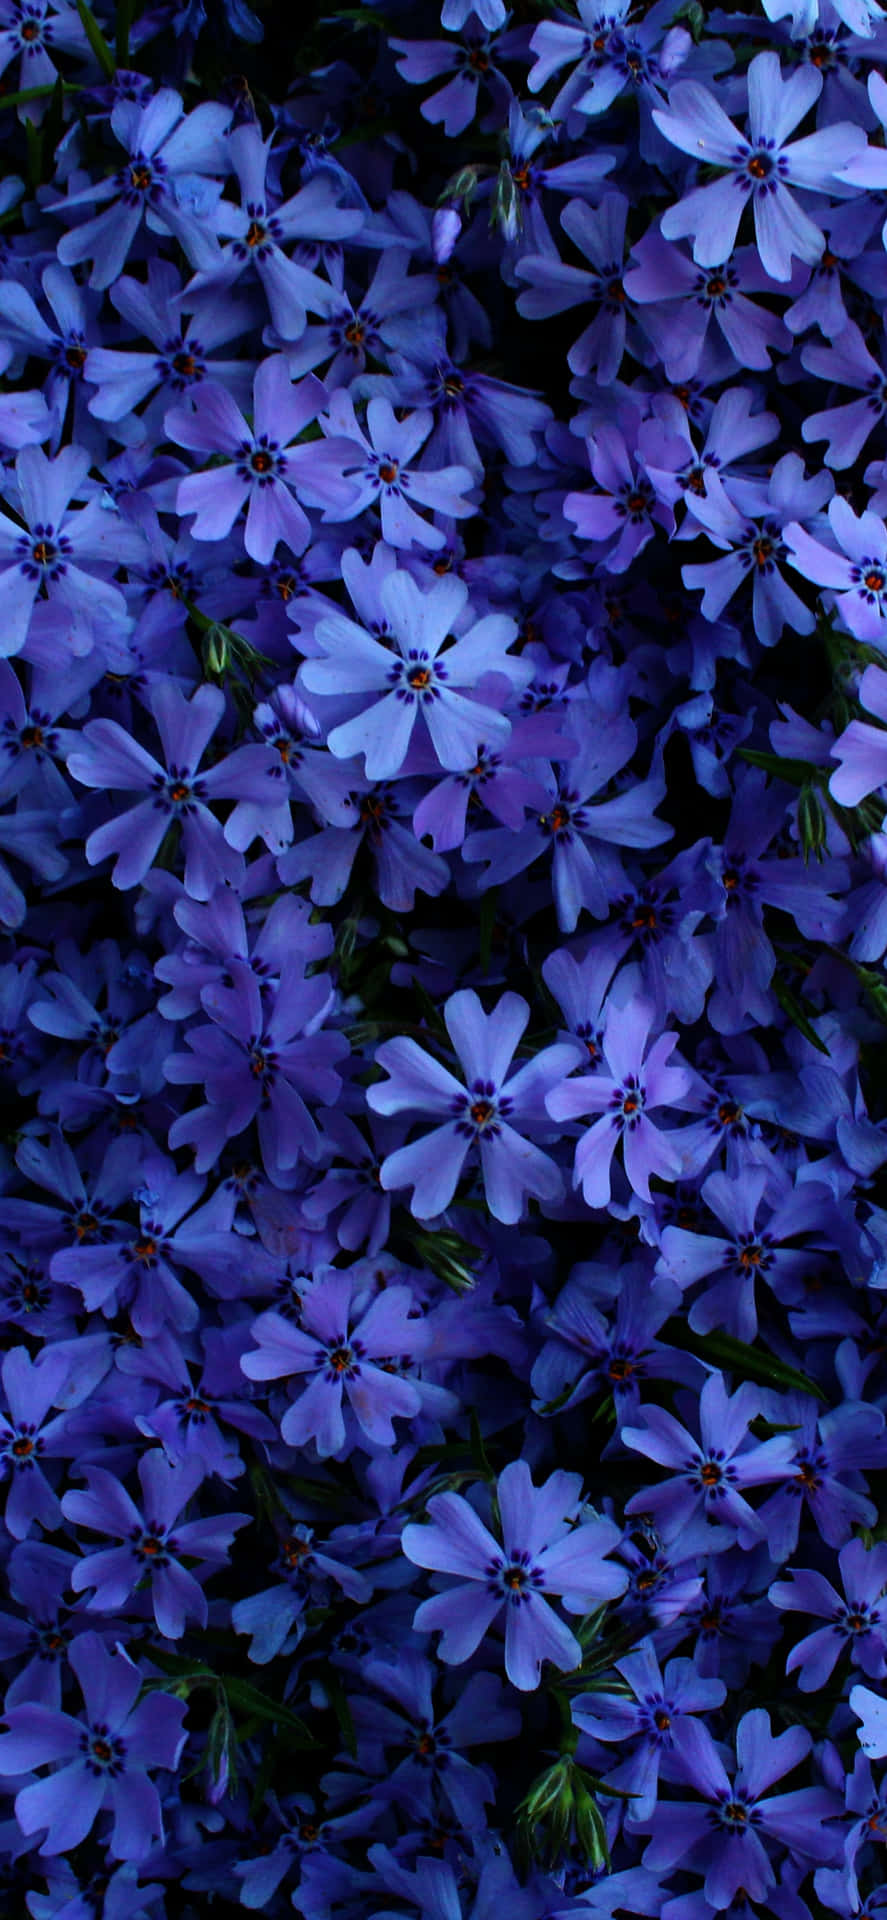 "A vibrant, gorgeous blue flower in full bloom"